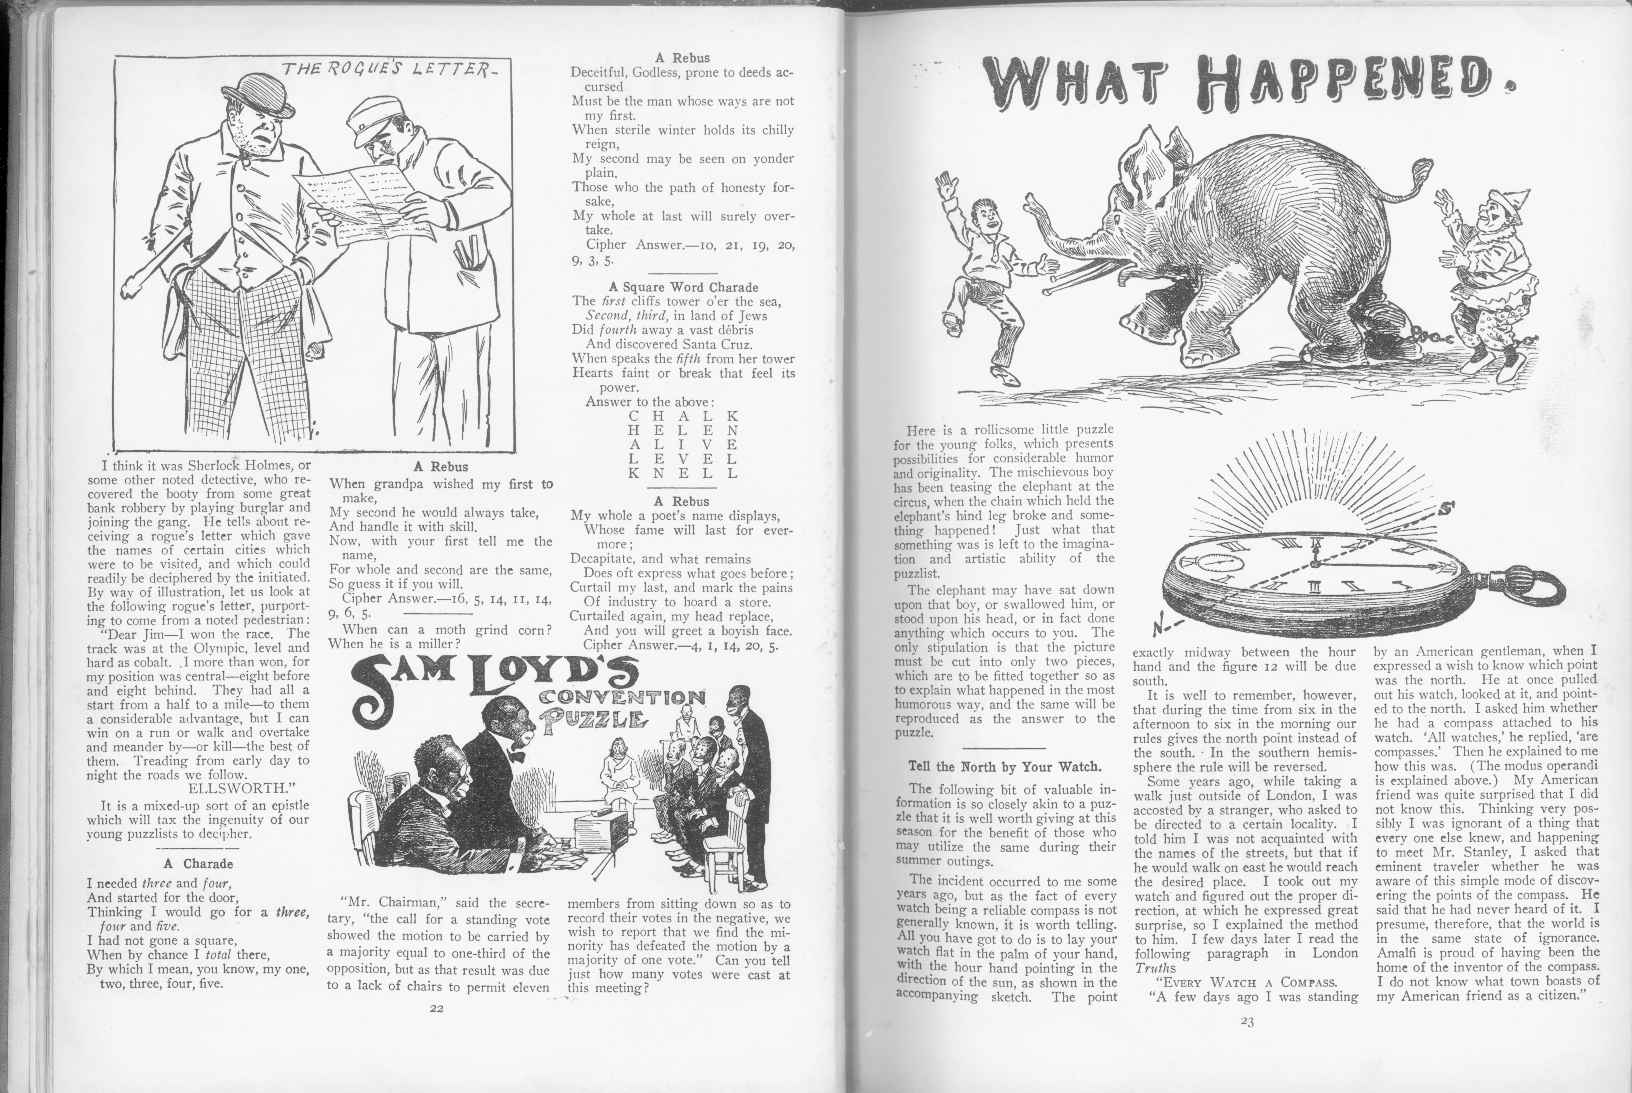 Sam Loyd - Cyclopedia of Puzzles - page 22-23